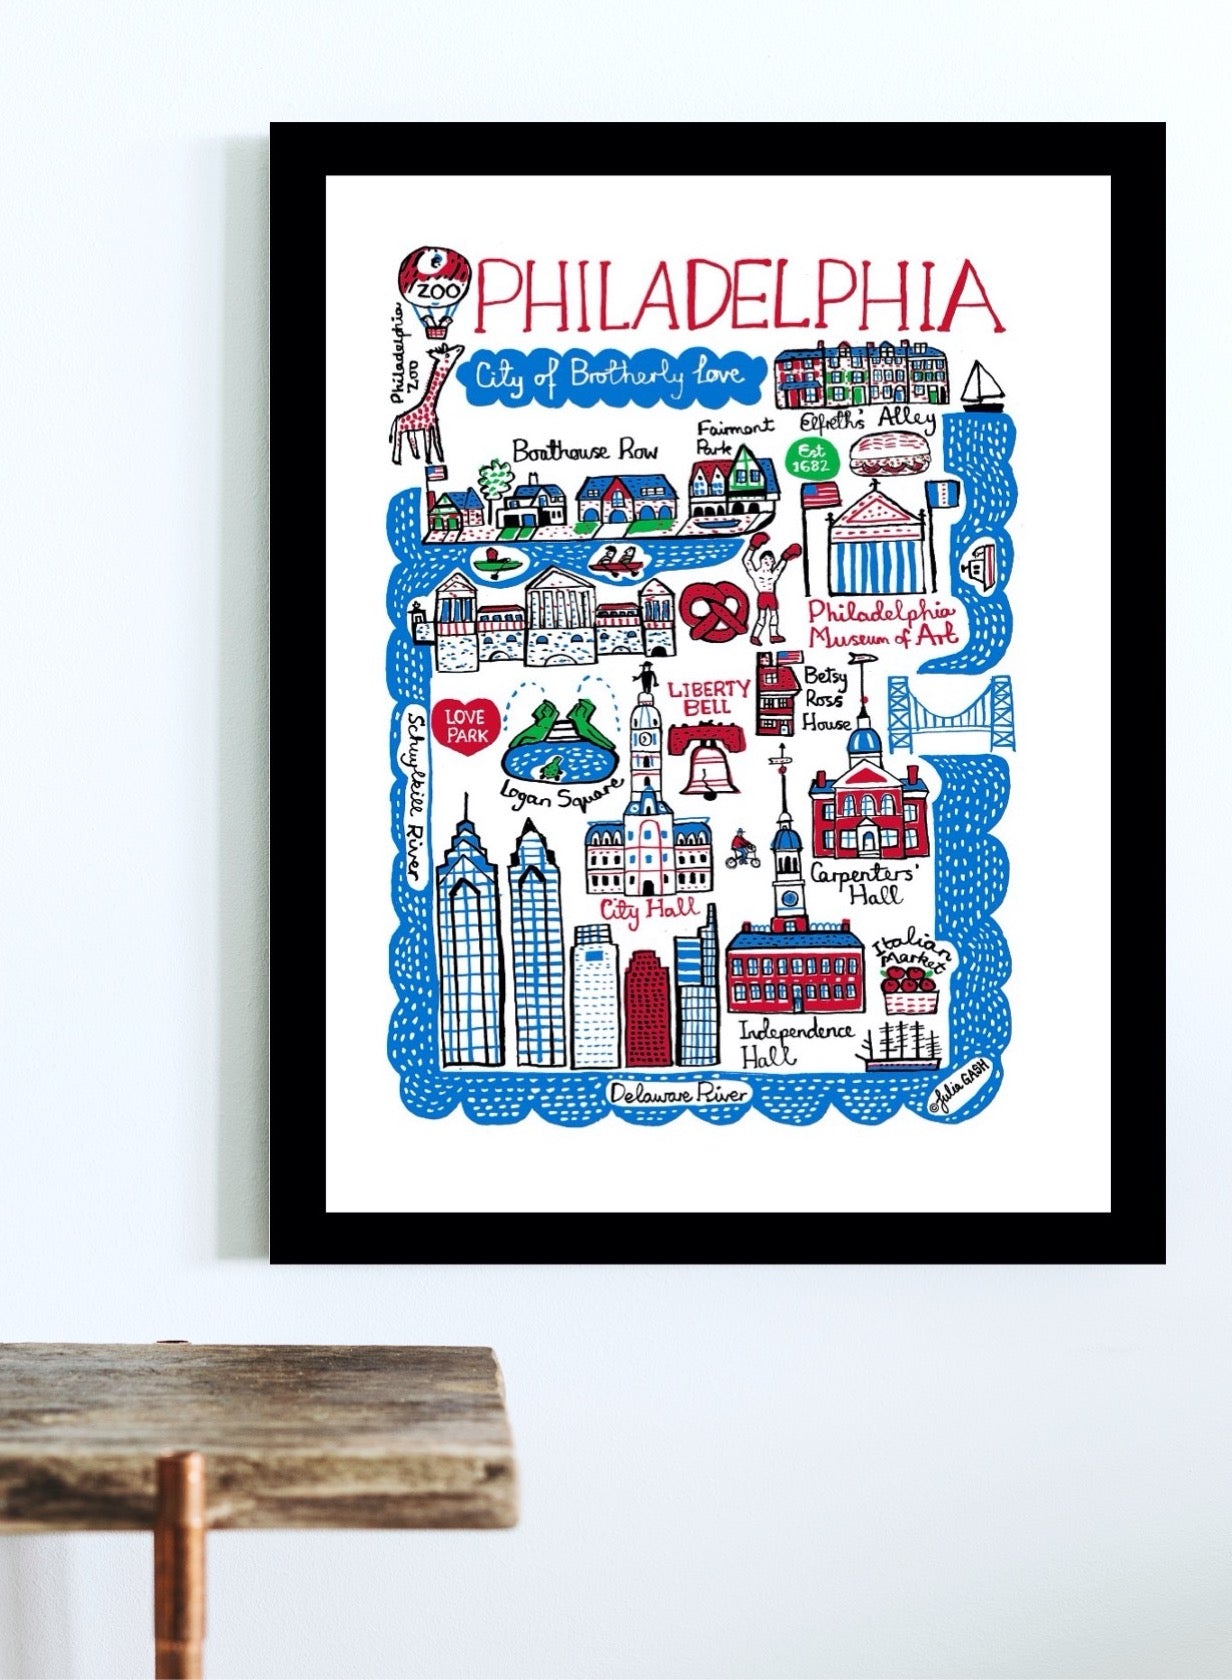 Modern Philadelphia Pennsylvania USA Travel Map Illustration by British travel artist Julia Gash